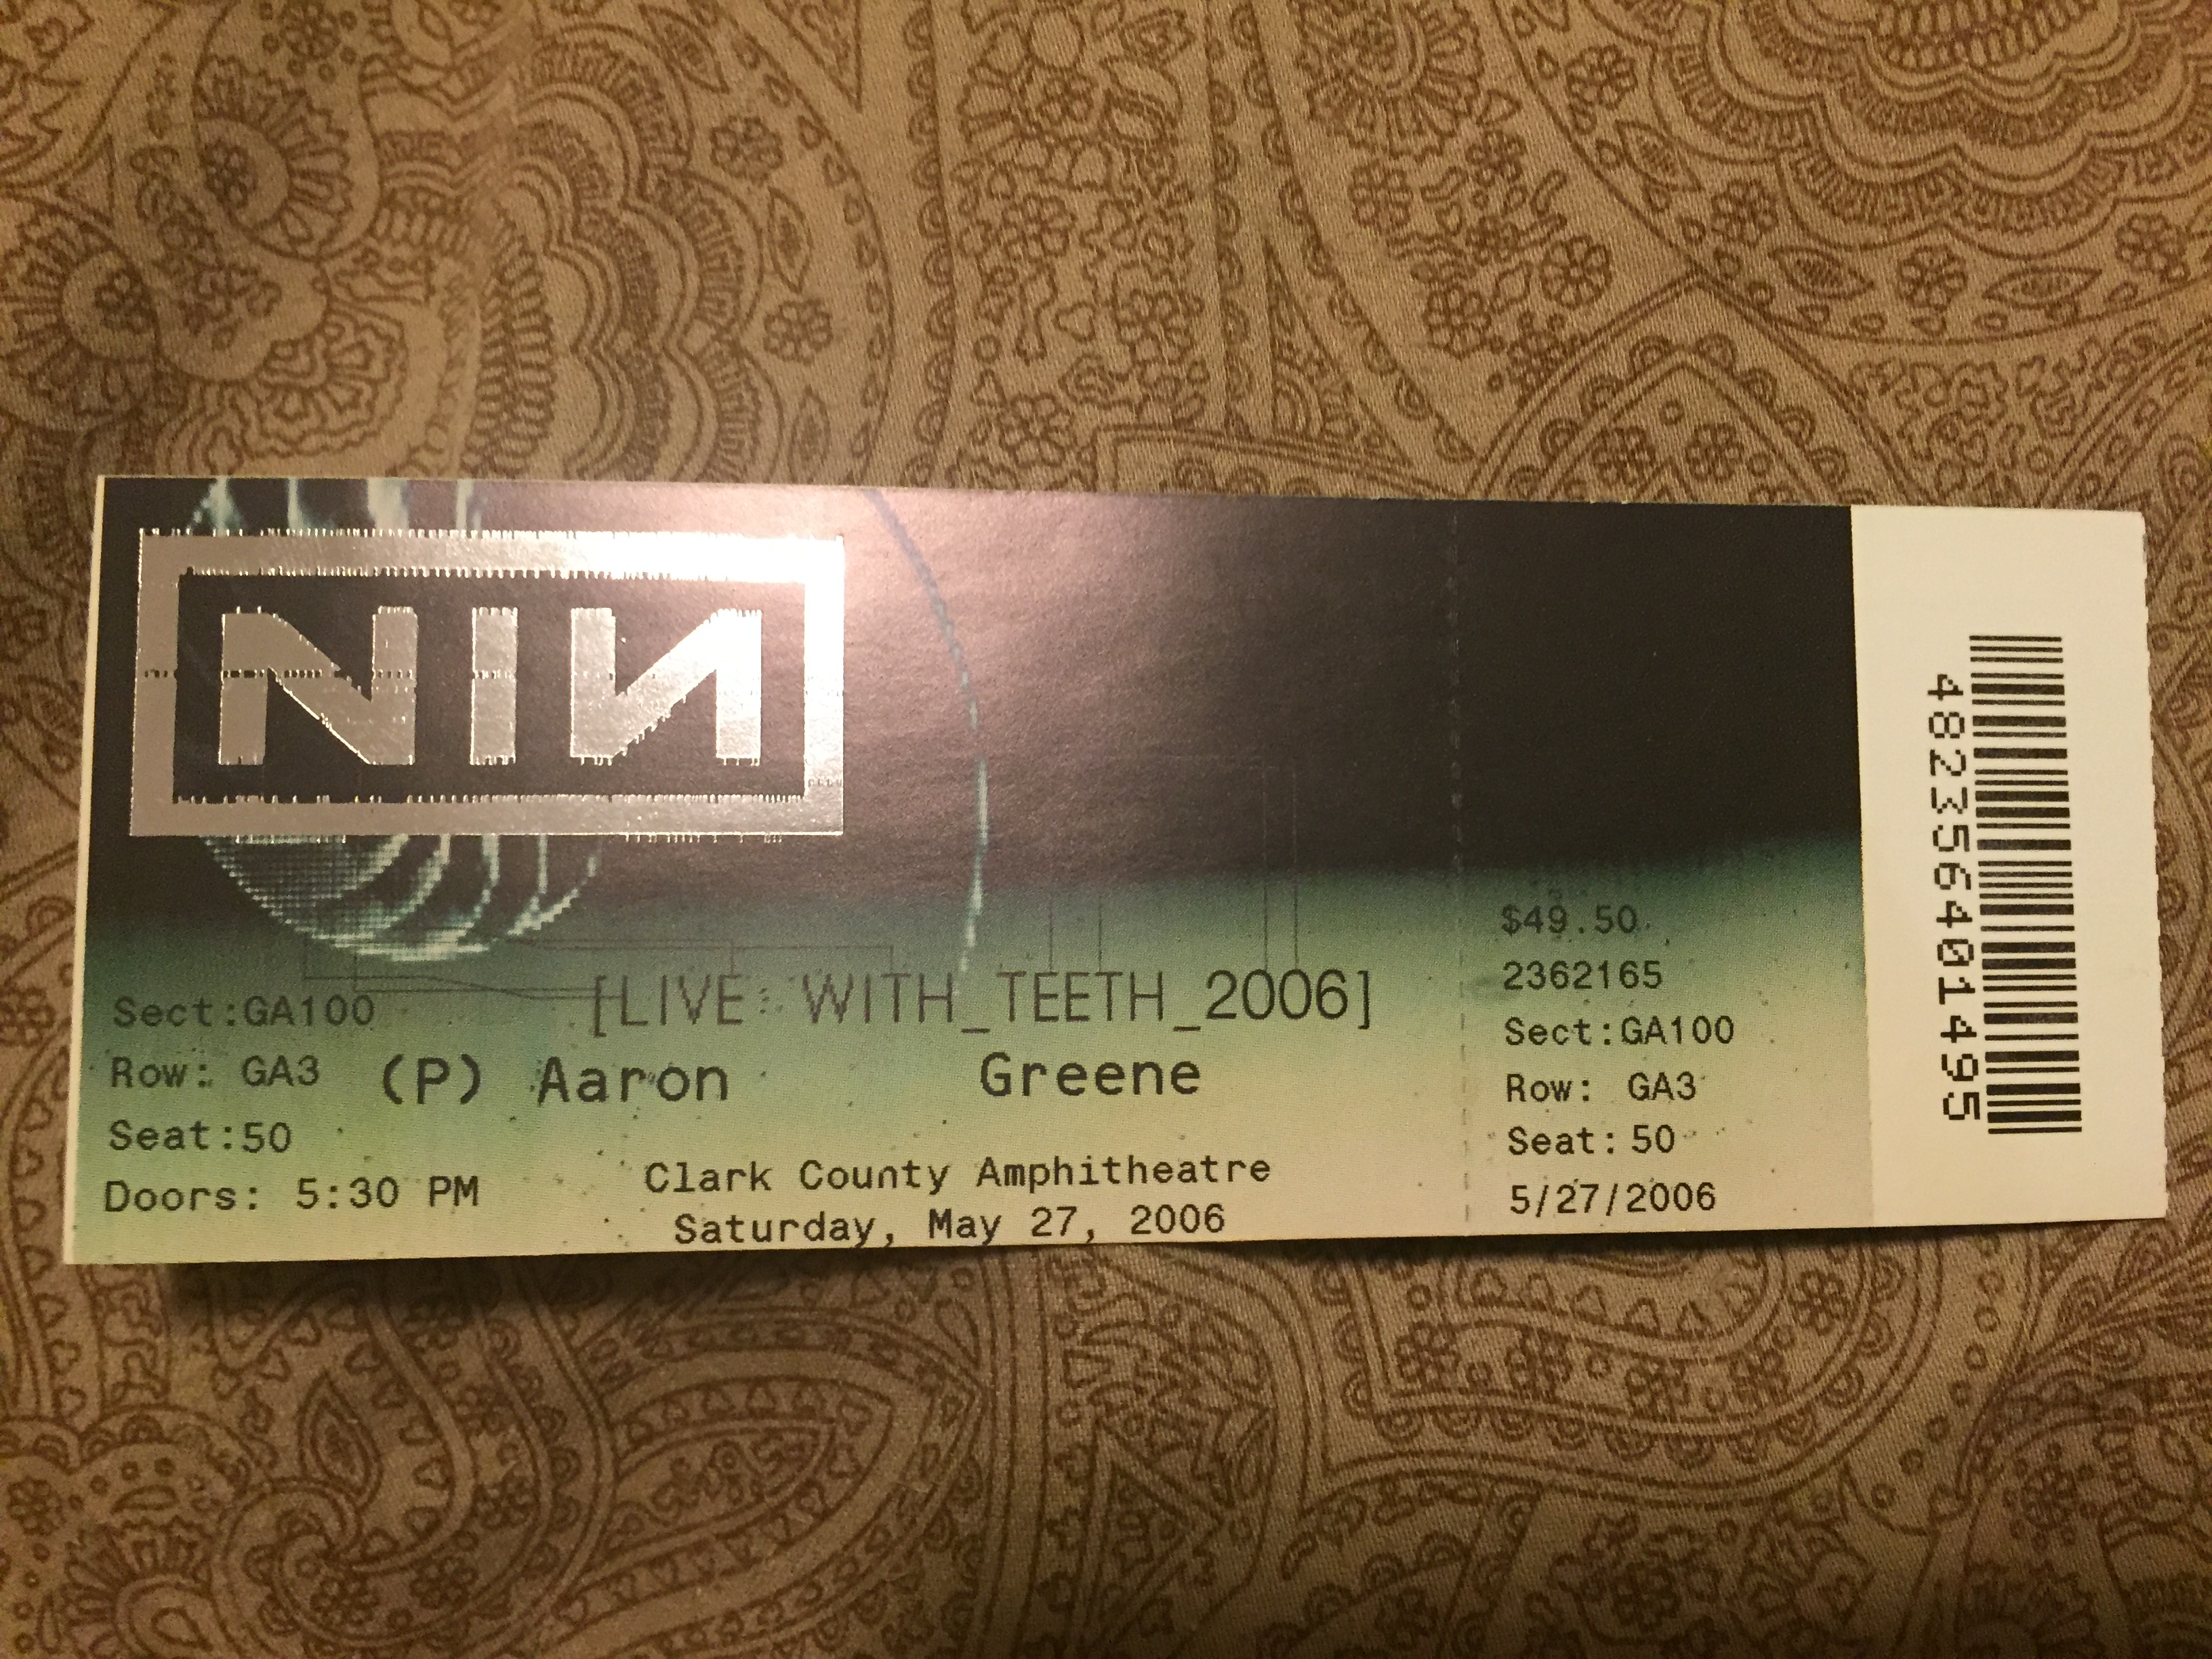 2006/05/27 Ticket